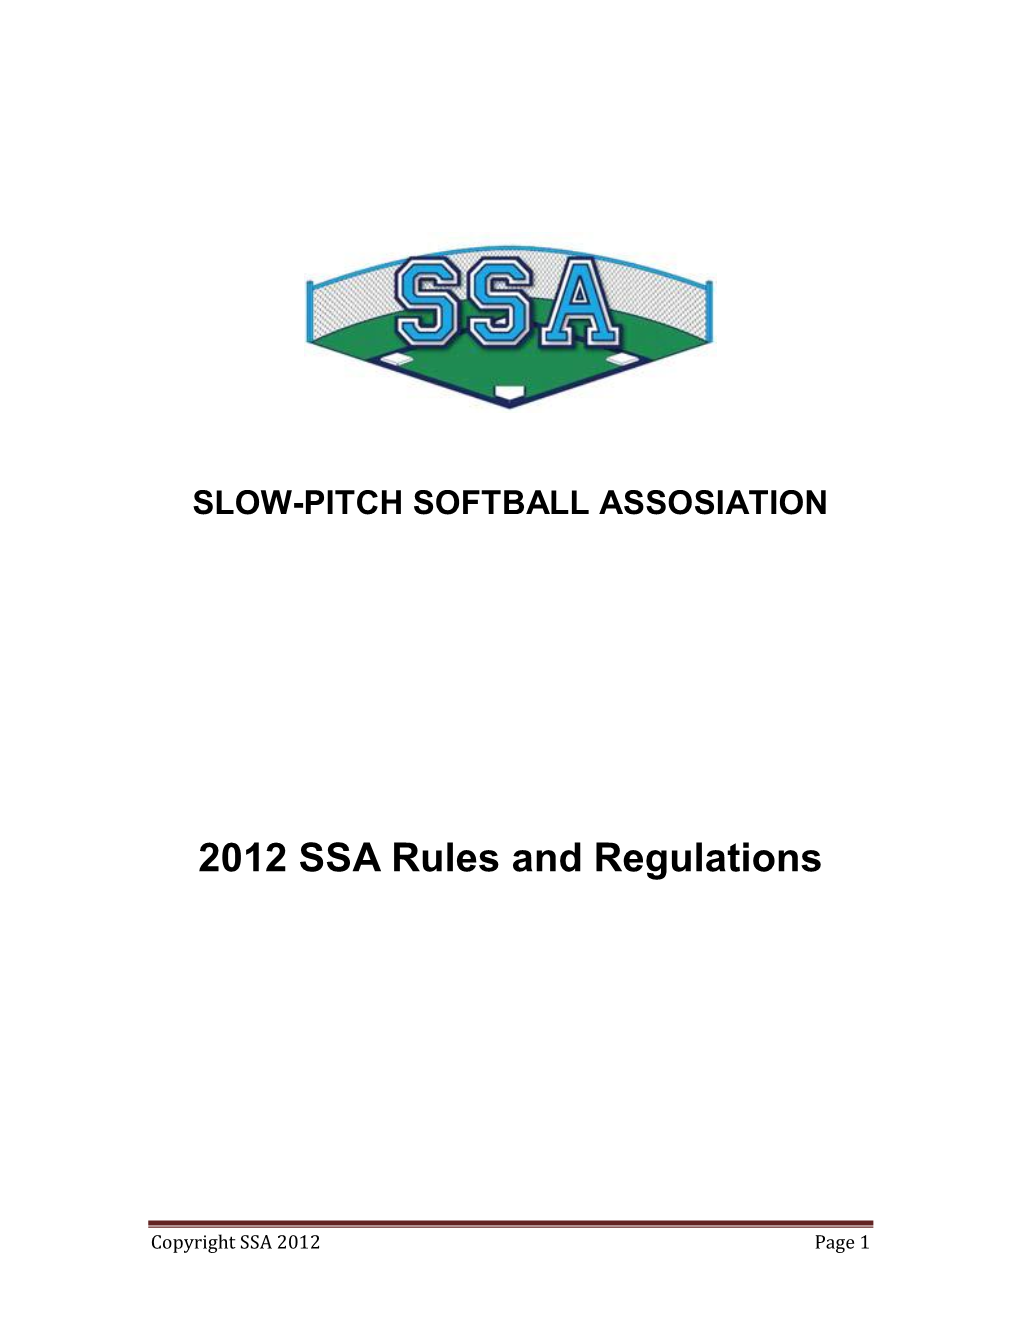 Slow-Pitch Softball Association (SSA) Rule Book 2012